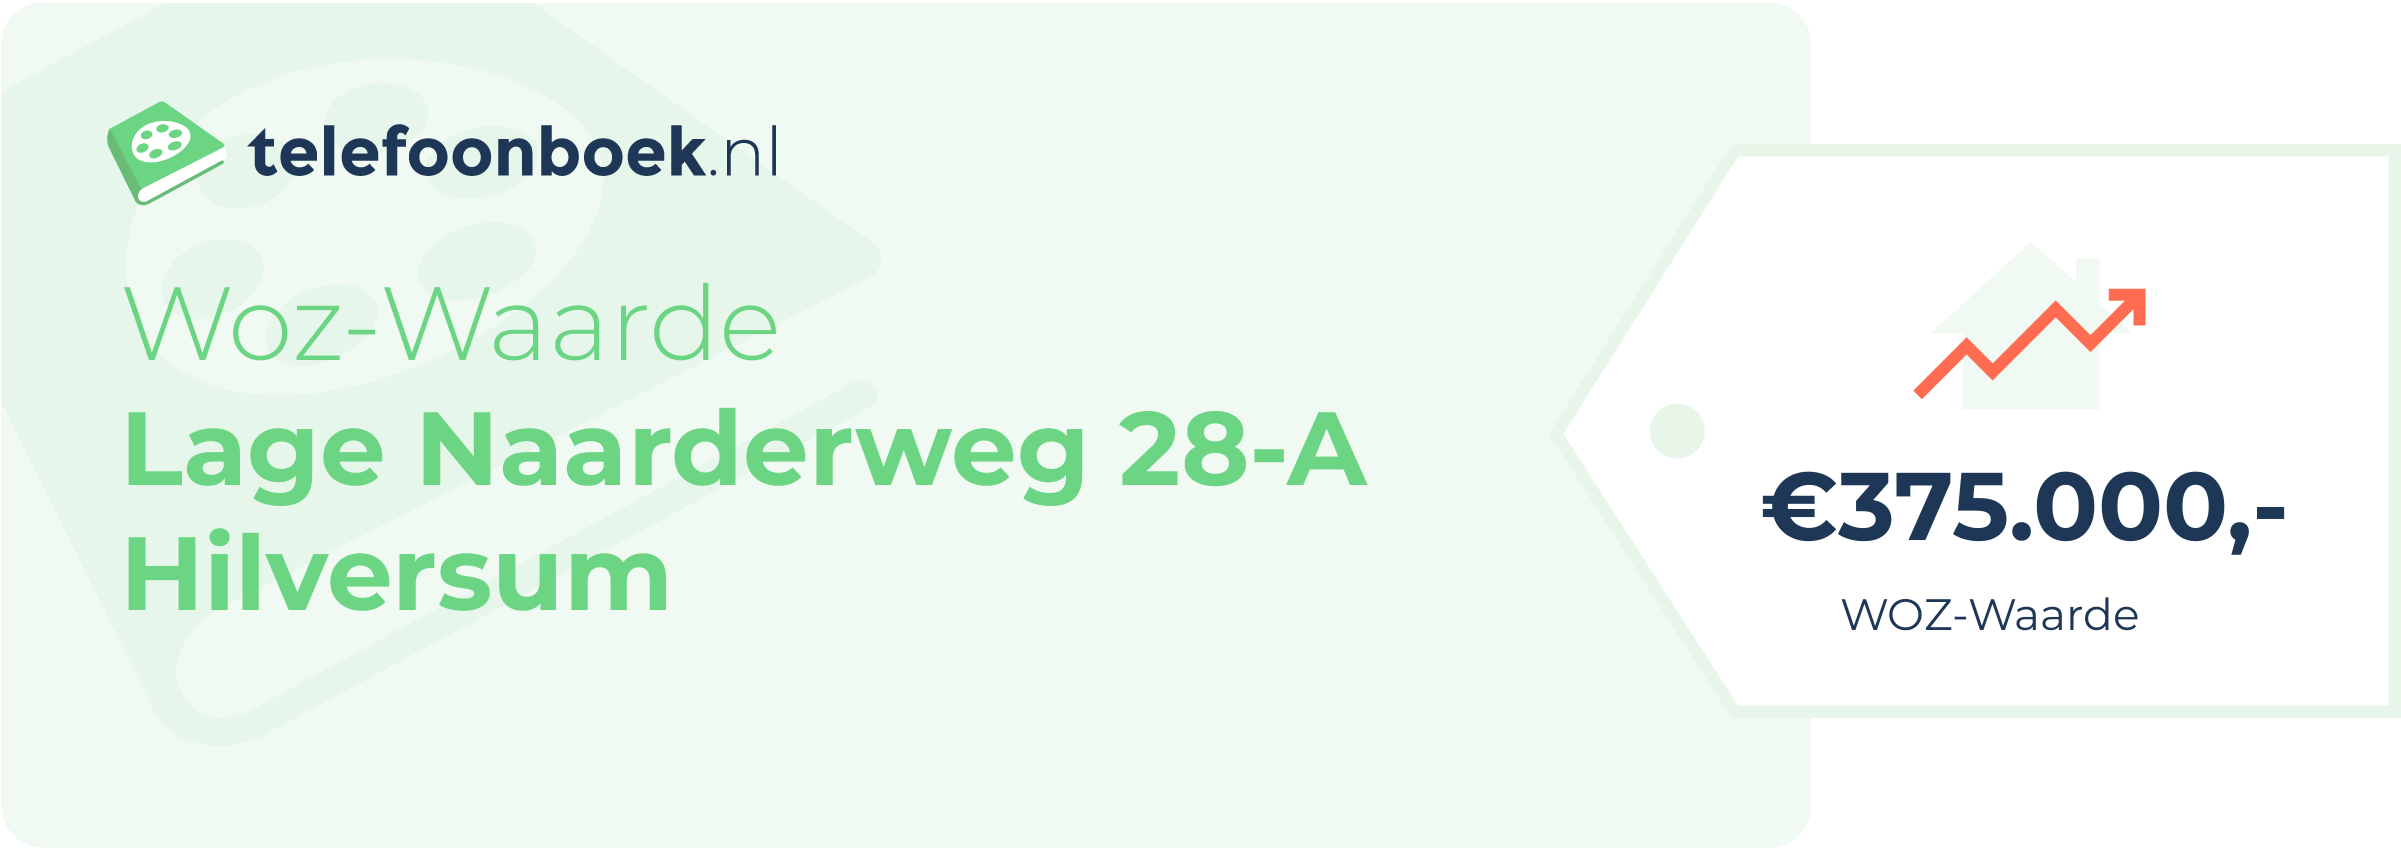 WOZ-waarde Lage Naarderweg 28-A Hilversum